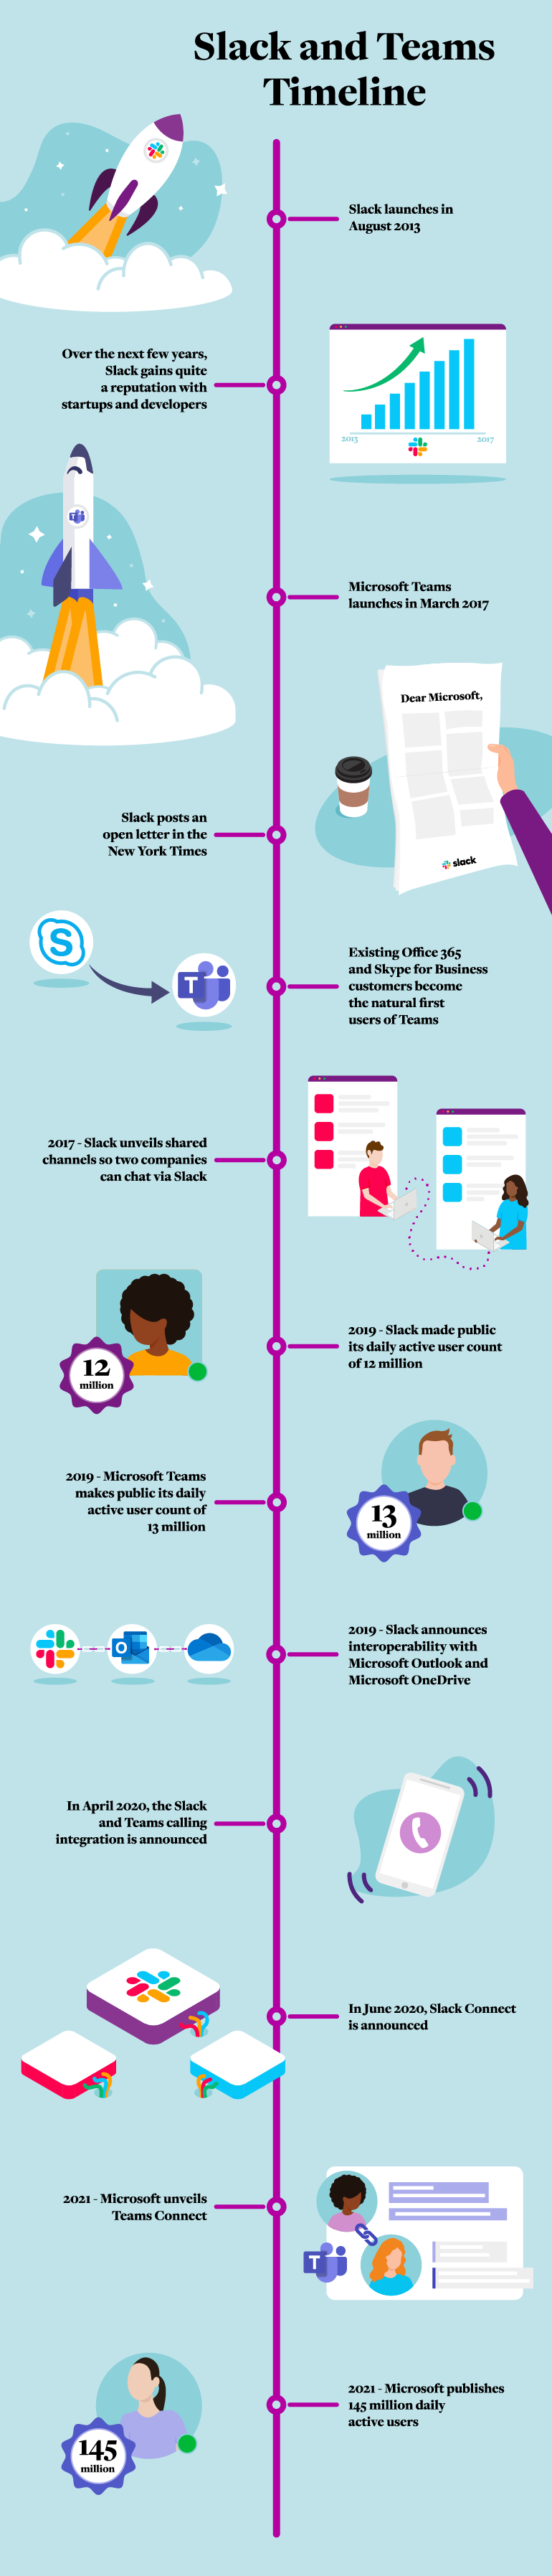 Slack vs Microsoft Teams battle timeline